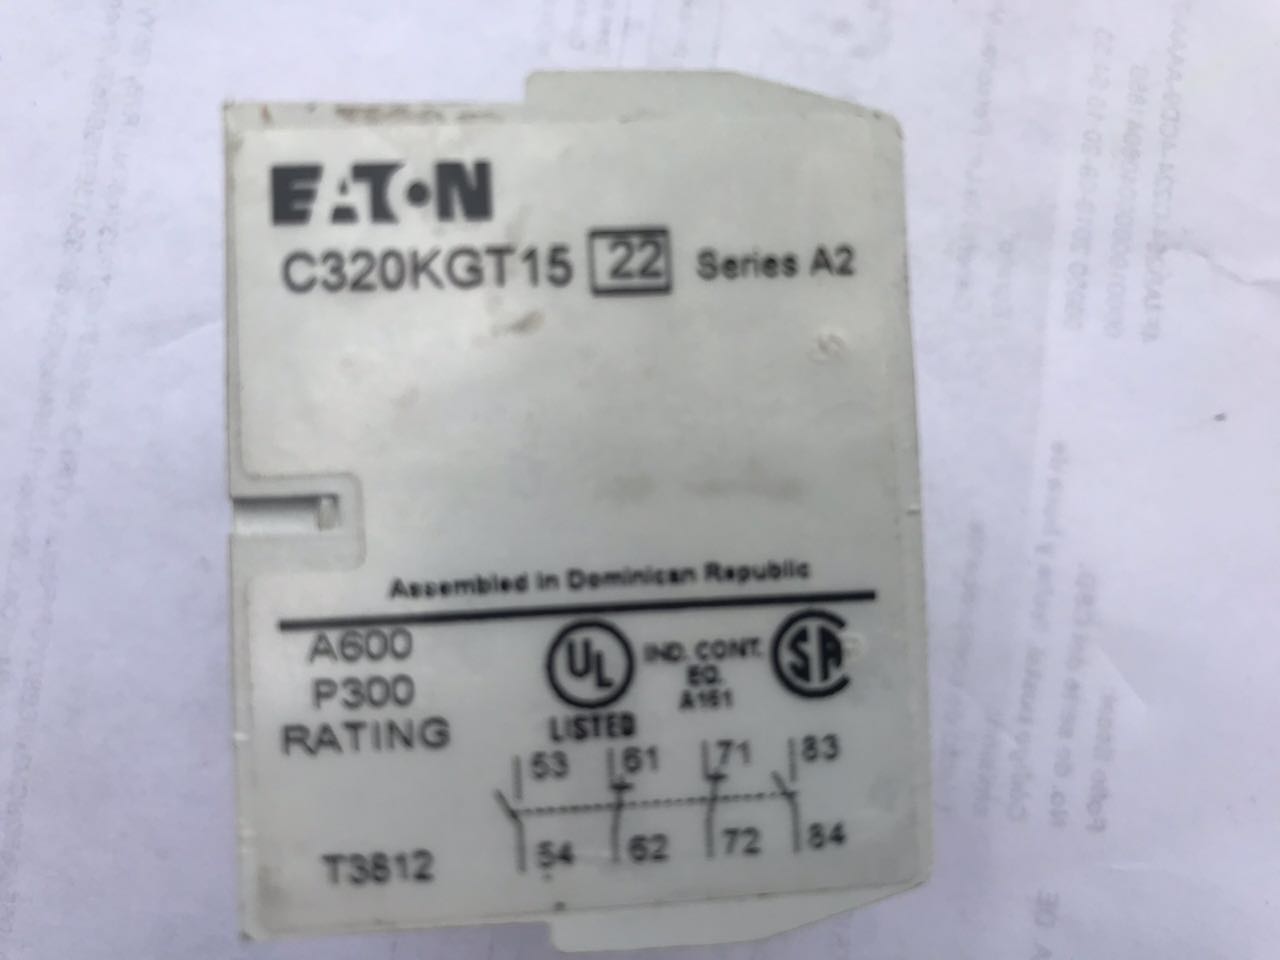 Contactos Auxiliares Eaton C320-KGT15